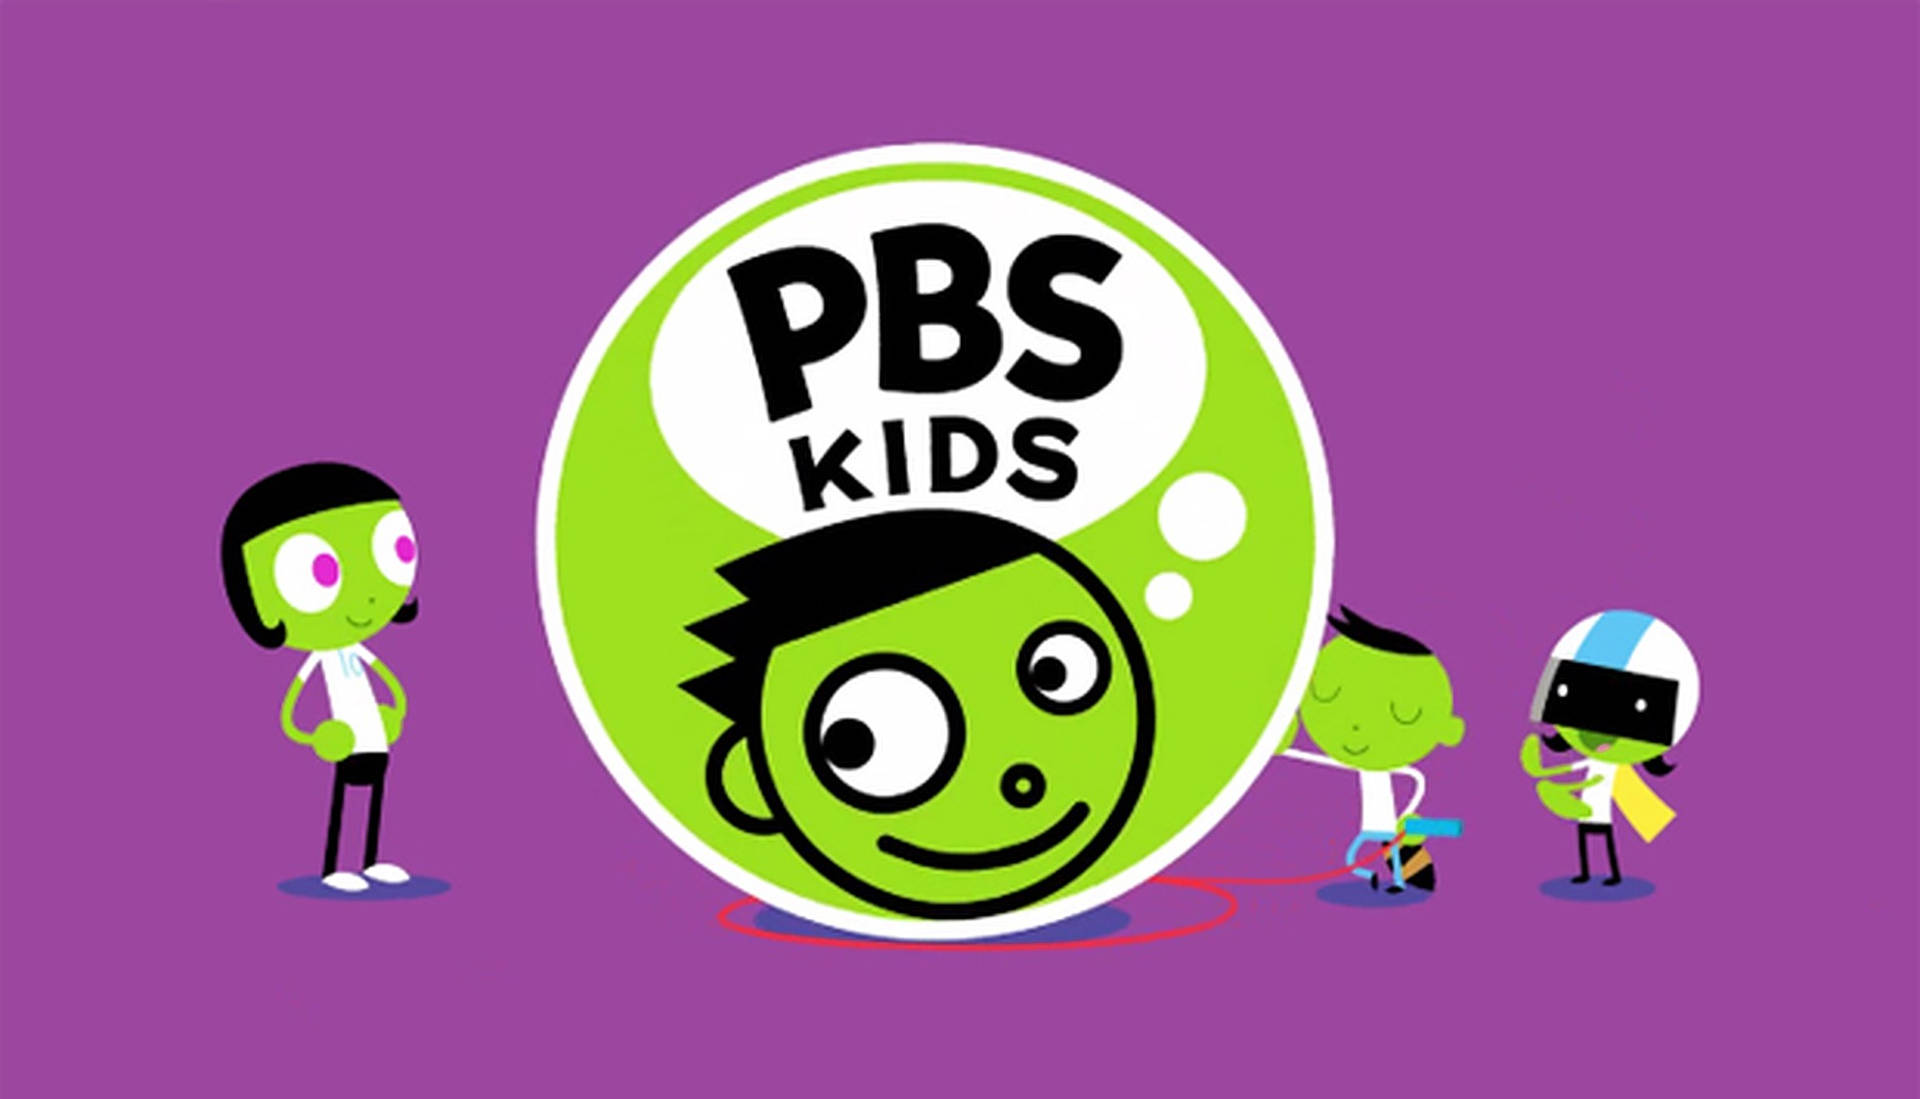 Free Pbs Kids Wallpaper Downloads, [100+] Pbs Kids Wallpapers for FREE |  